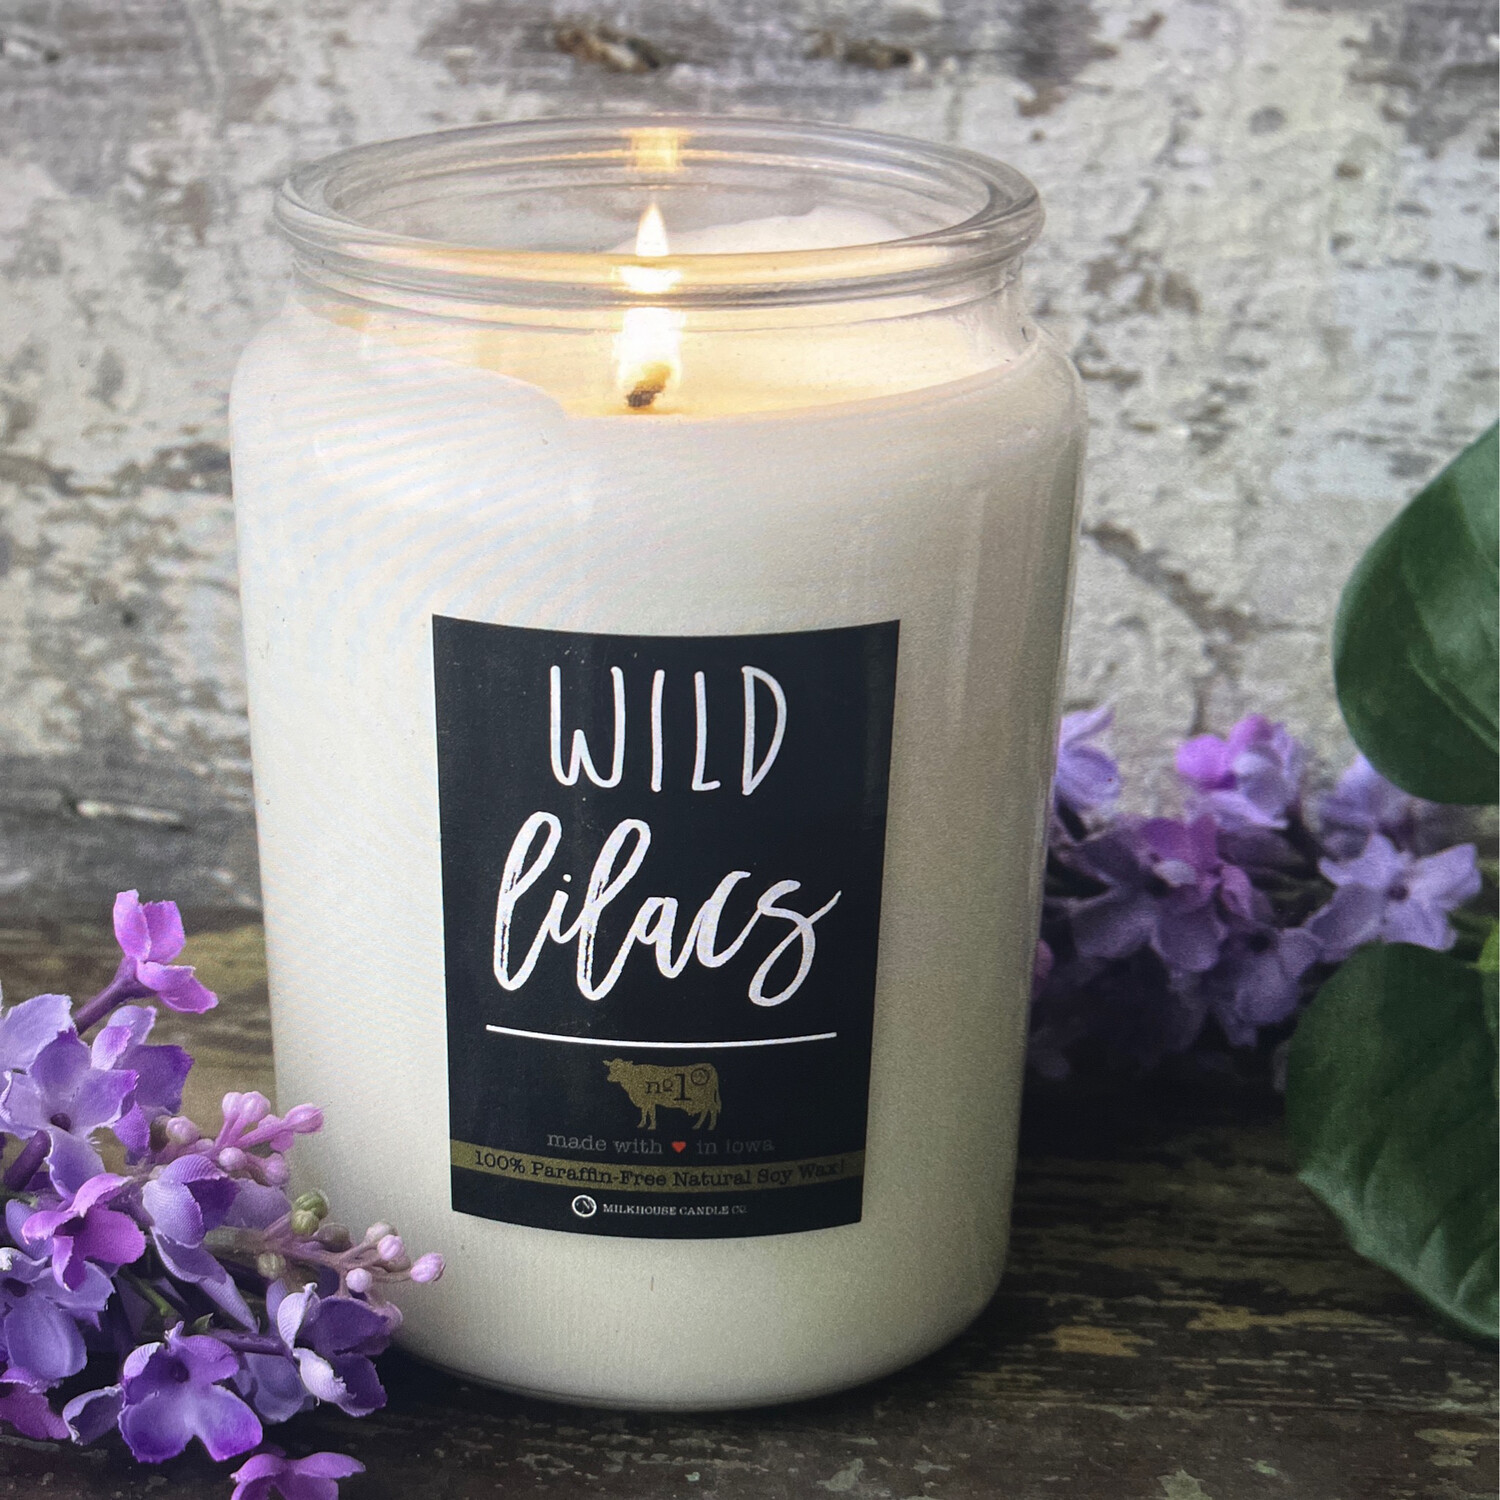 Milkhouse Candles 26oz Wild Lilacs